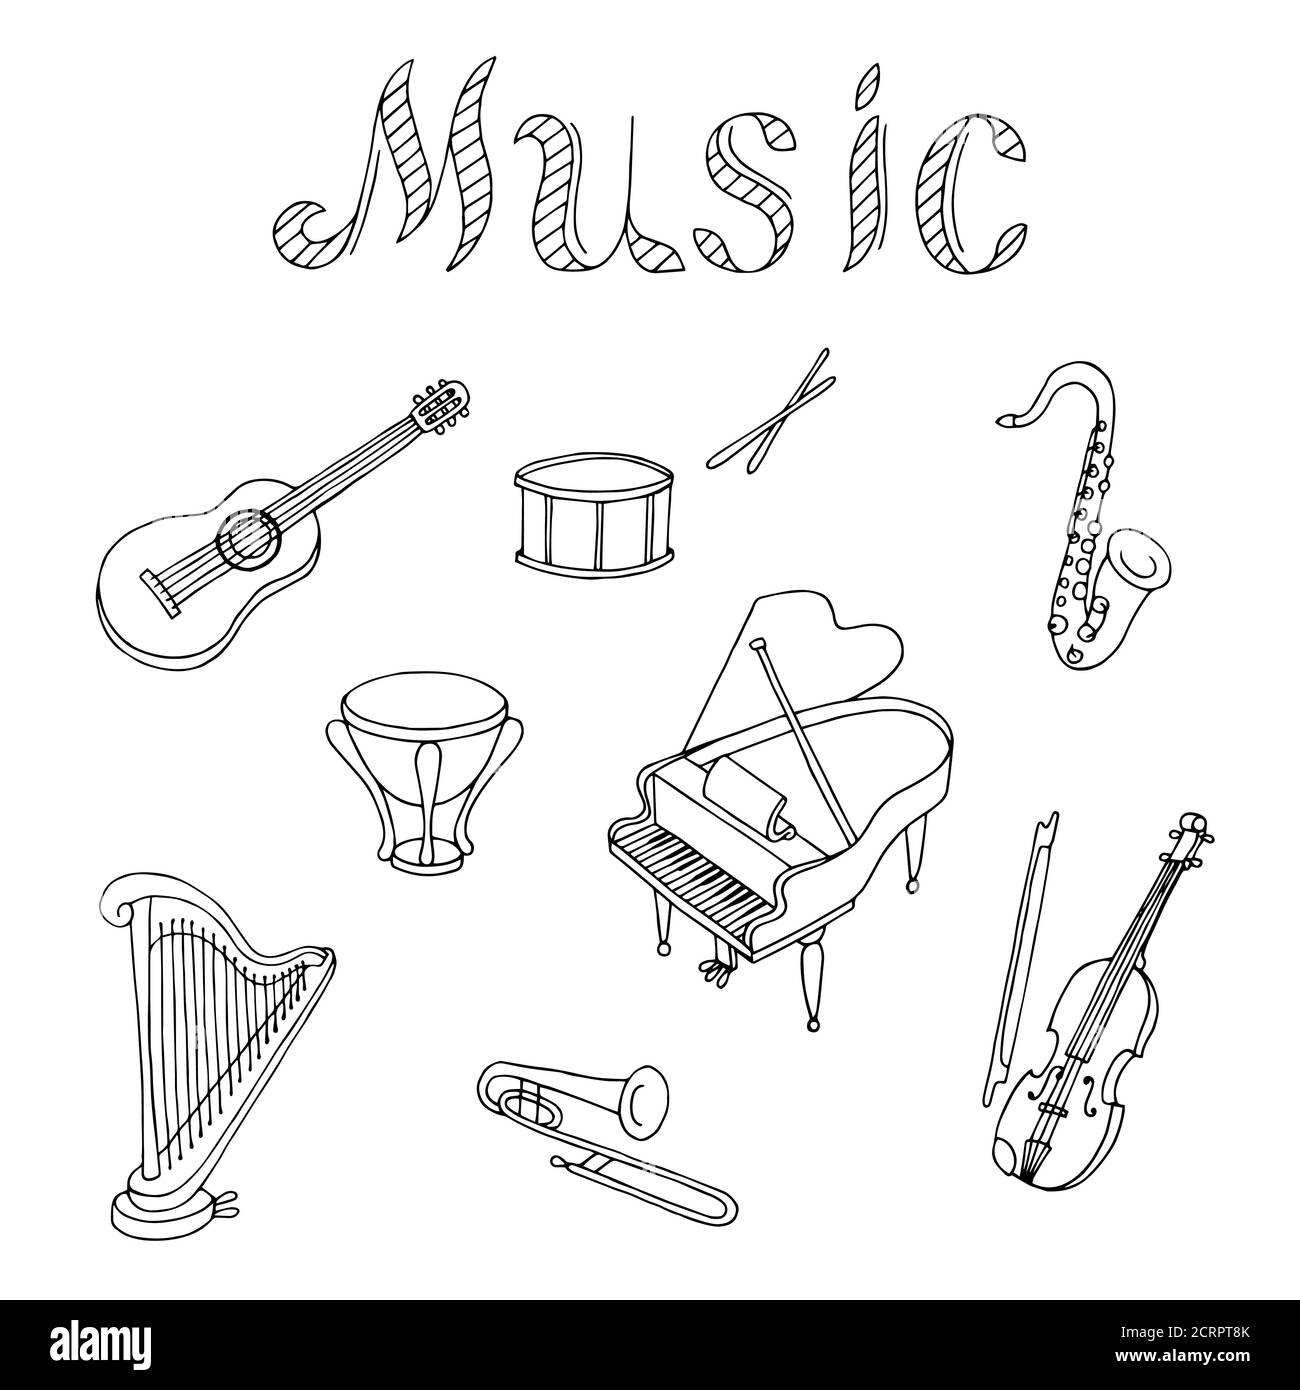 Musikinstrument Satz Grafik Kunst schwarz weiß isolierte Illustration  Vektor Stock-Vektorgrafik - Alamy